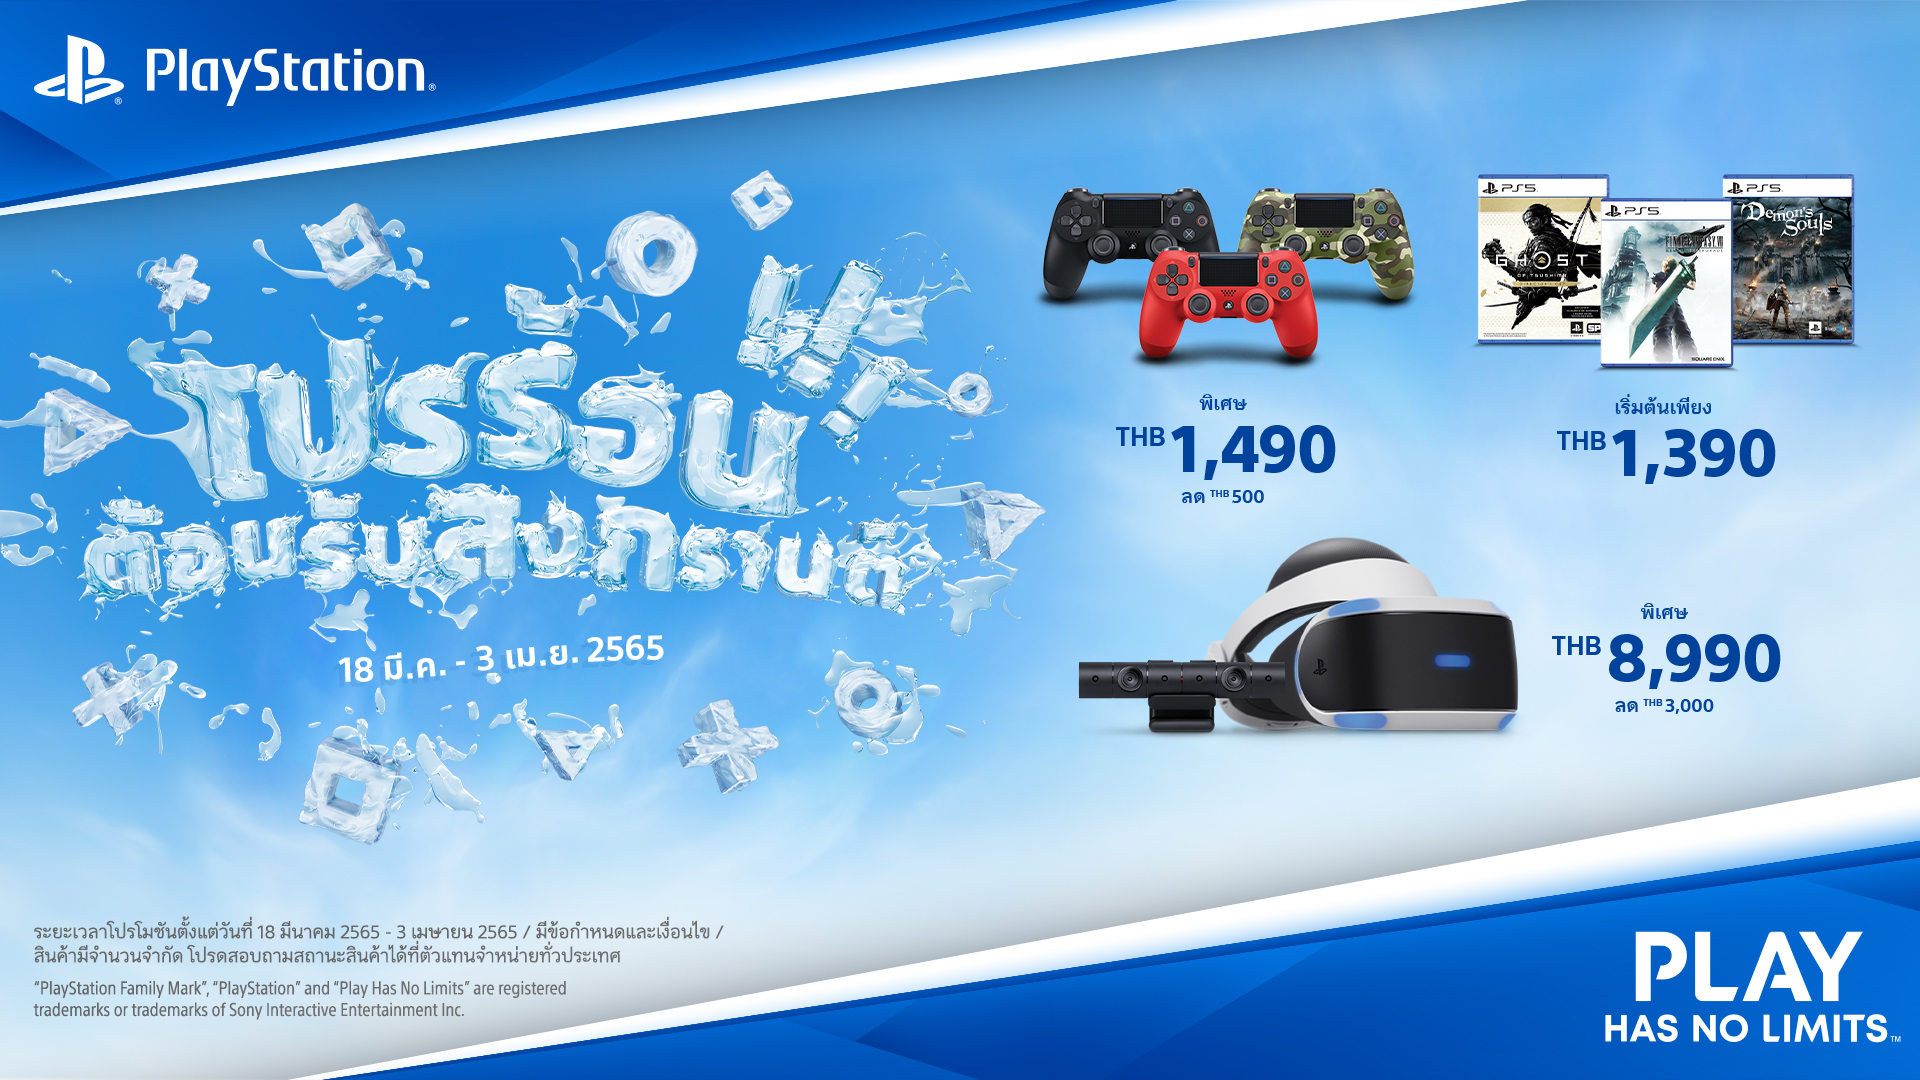 PlayStation ต้อนรับสงกรานต์ กับโปรโมชั่นสุดร้อนแรง “Songkran Deal”  ตั้งแต่ 18 มีนาคม - 3 เมษายน 2565